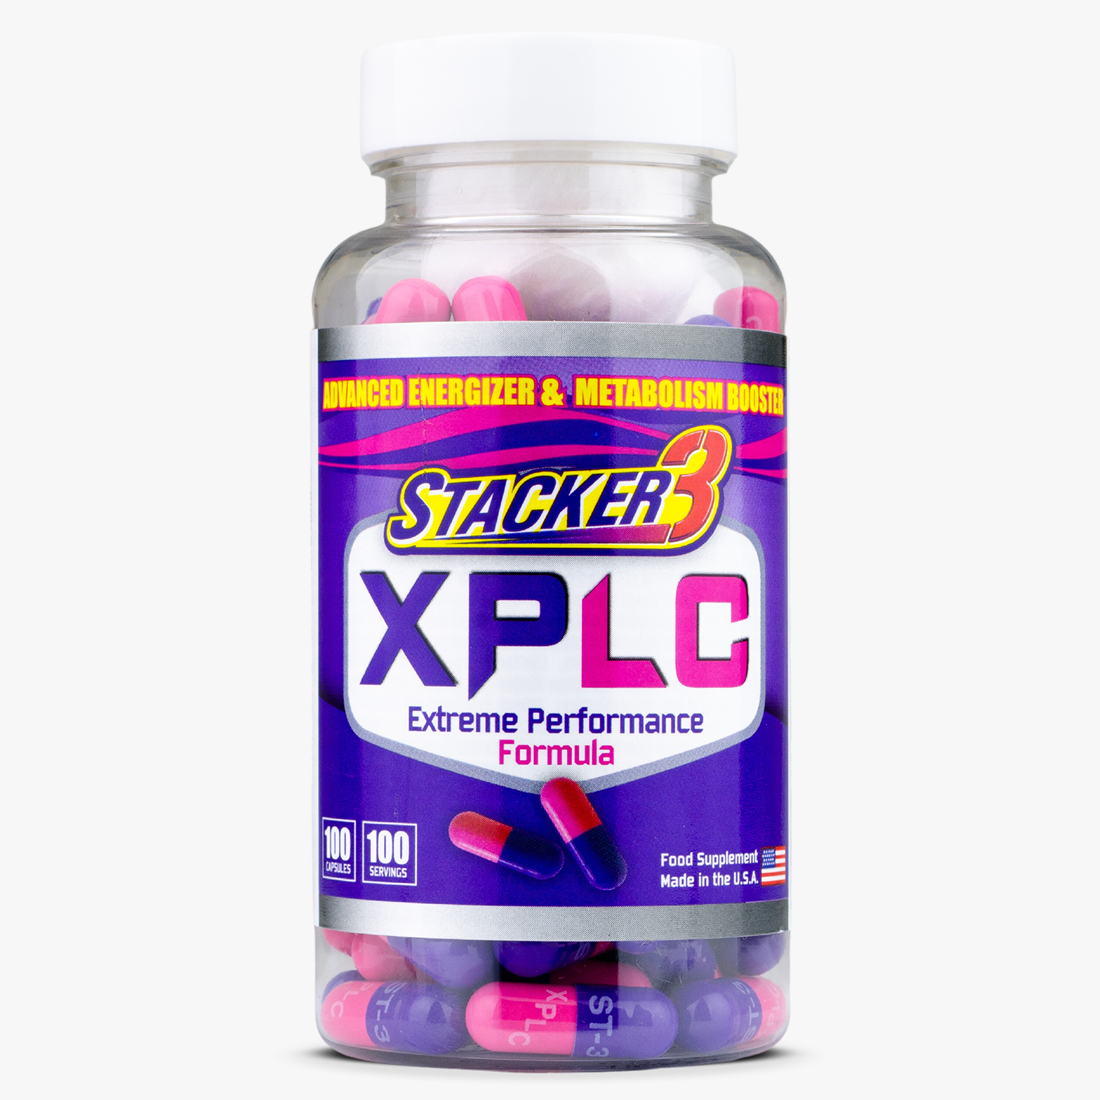 Stacker 3 XPLC 20ct Bottles x 12 = 240 capsules